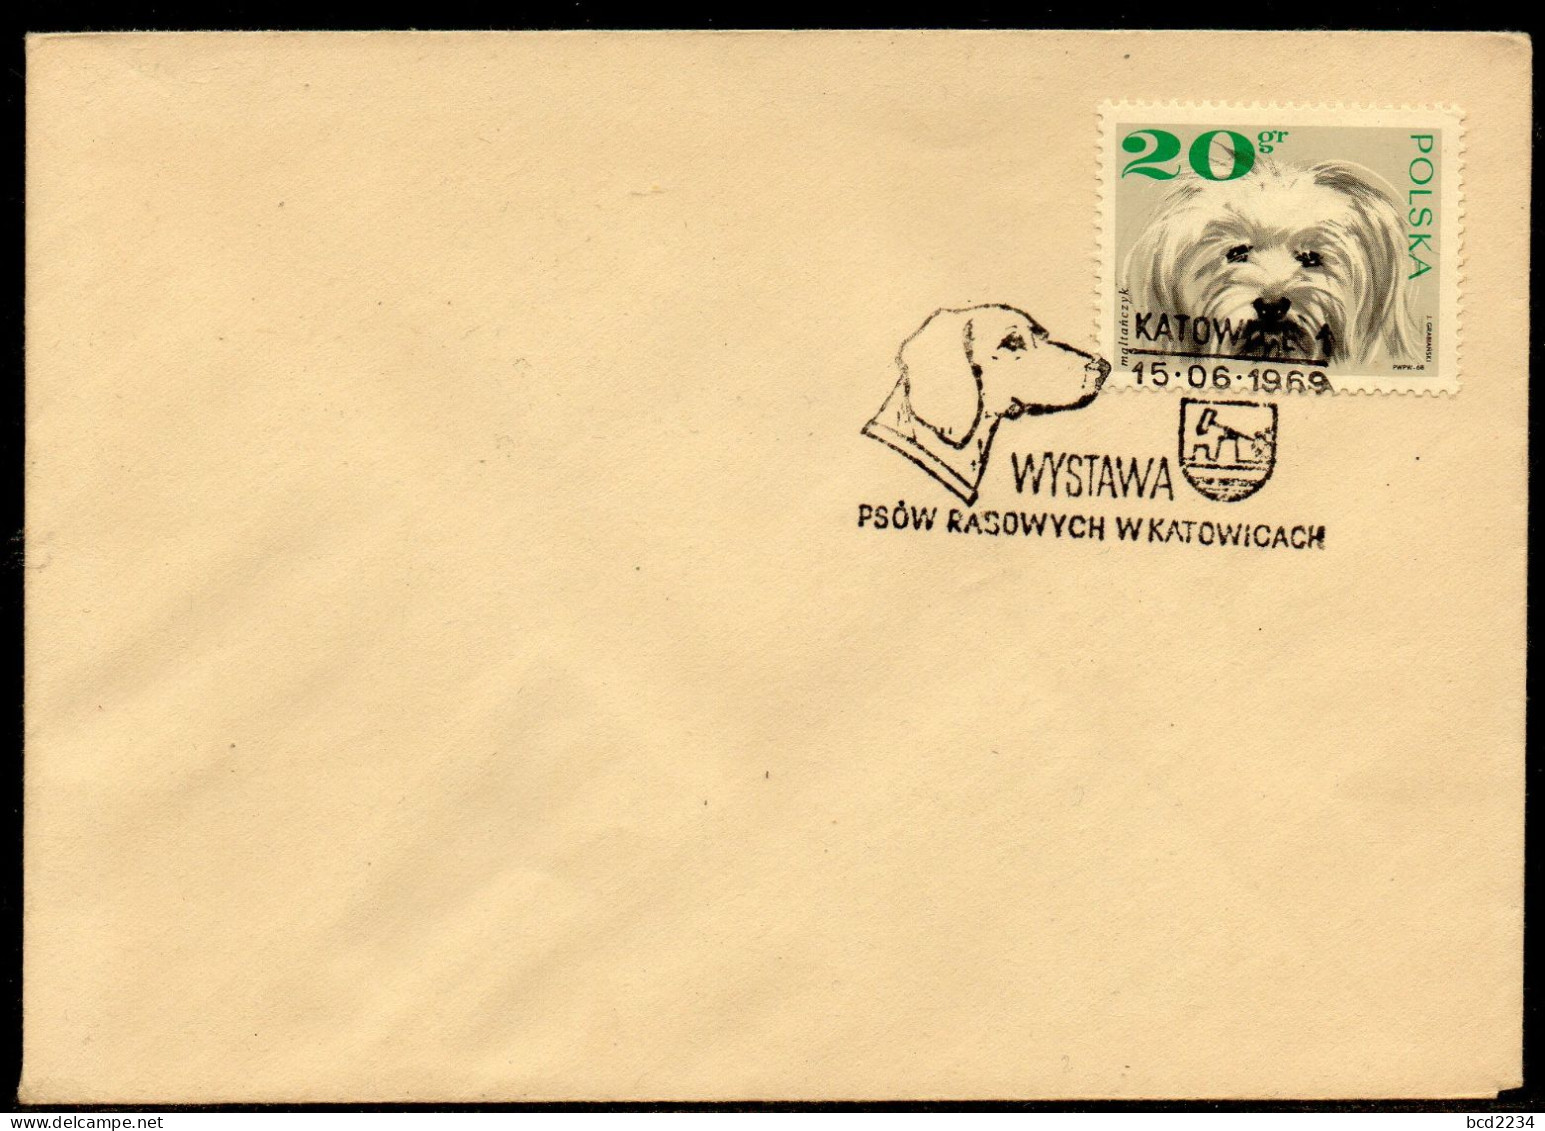 POLAND 1969 PEDIGREE DOG SHOW KATOWICE SPECIAL CANCEL ON COVER POLISH HOUND OGAR POLSKI DOGS - Chiens